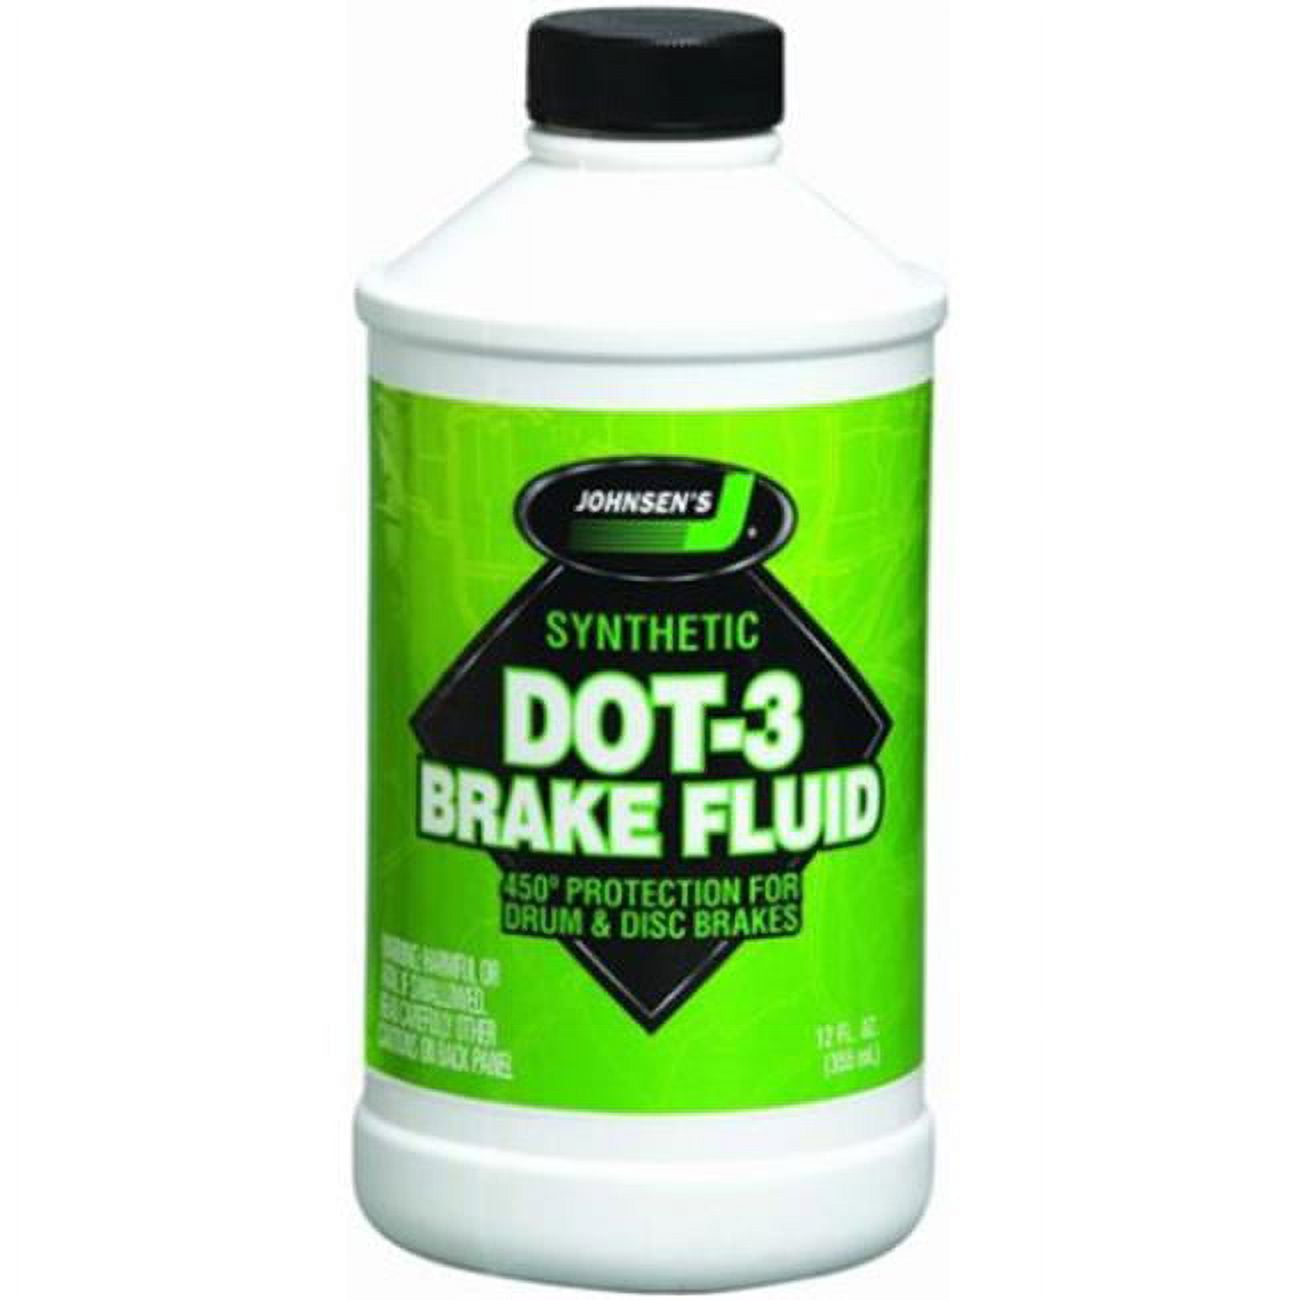 2212 12 Oz Premium Brake Fluid, White